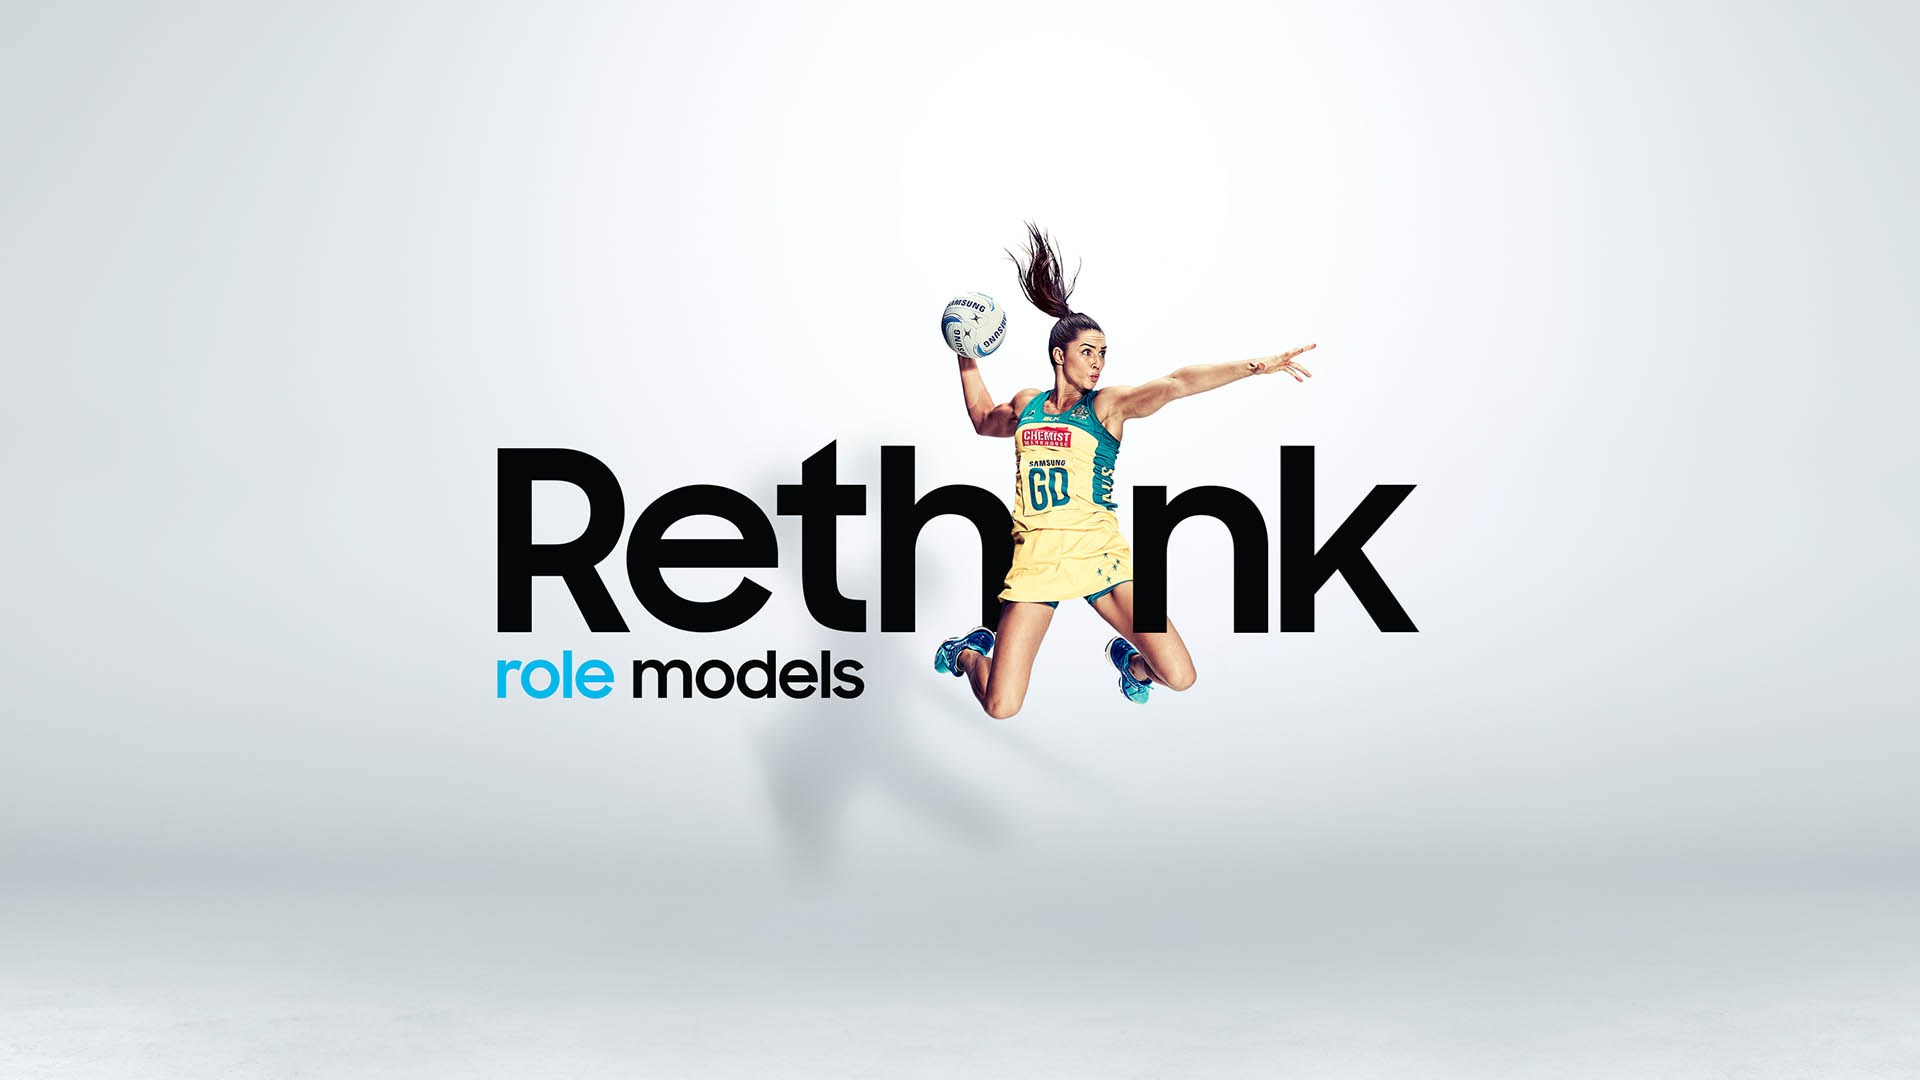 Rethink Role Models